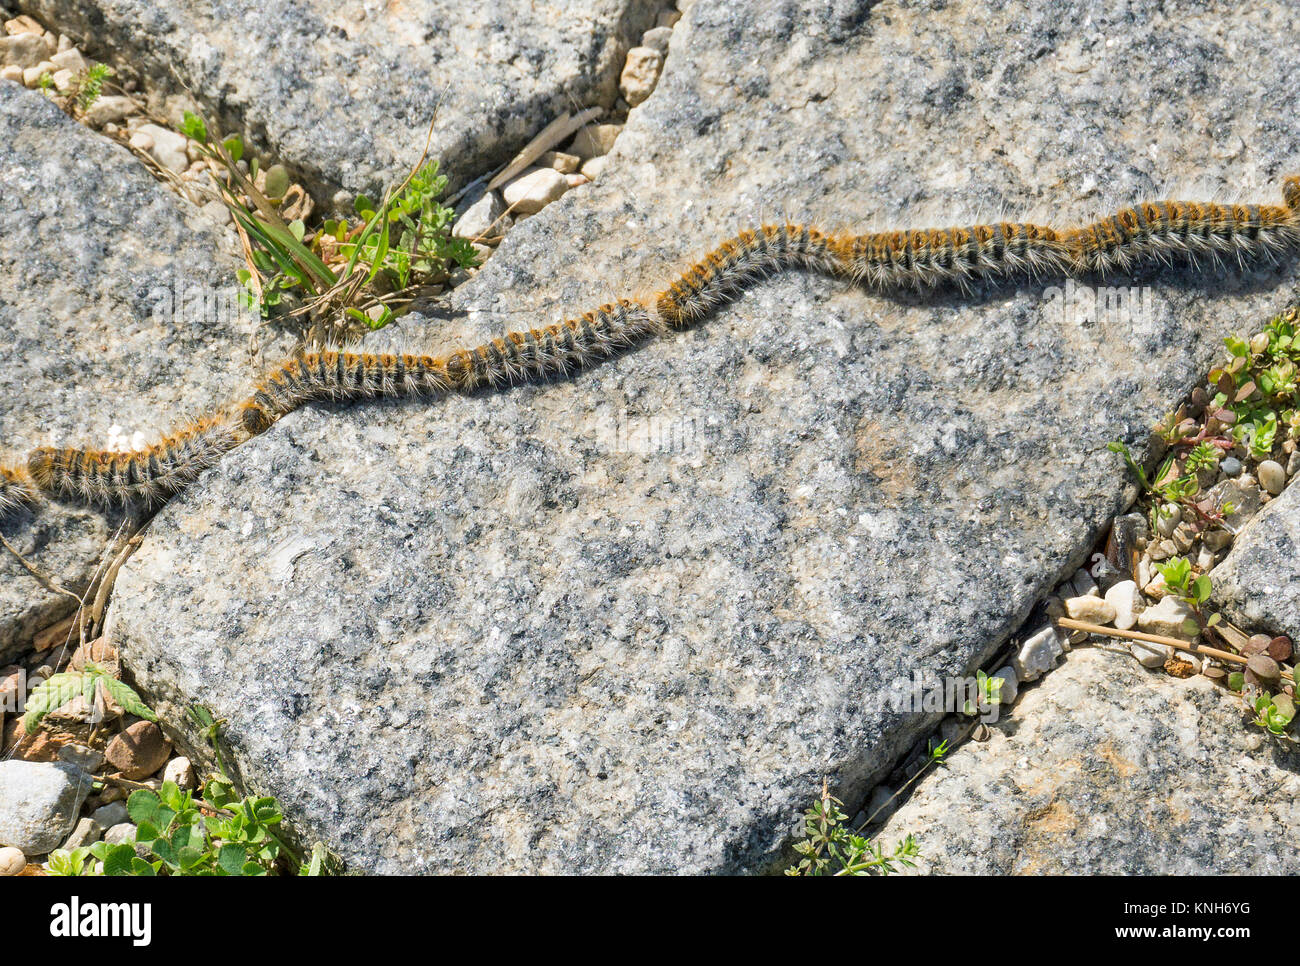 Pine Processionary larvae (Thaumetopoea pityocampa), marching on cobble stone, Alanya, turkish riviera, Turkey Stock Photo